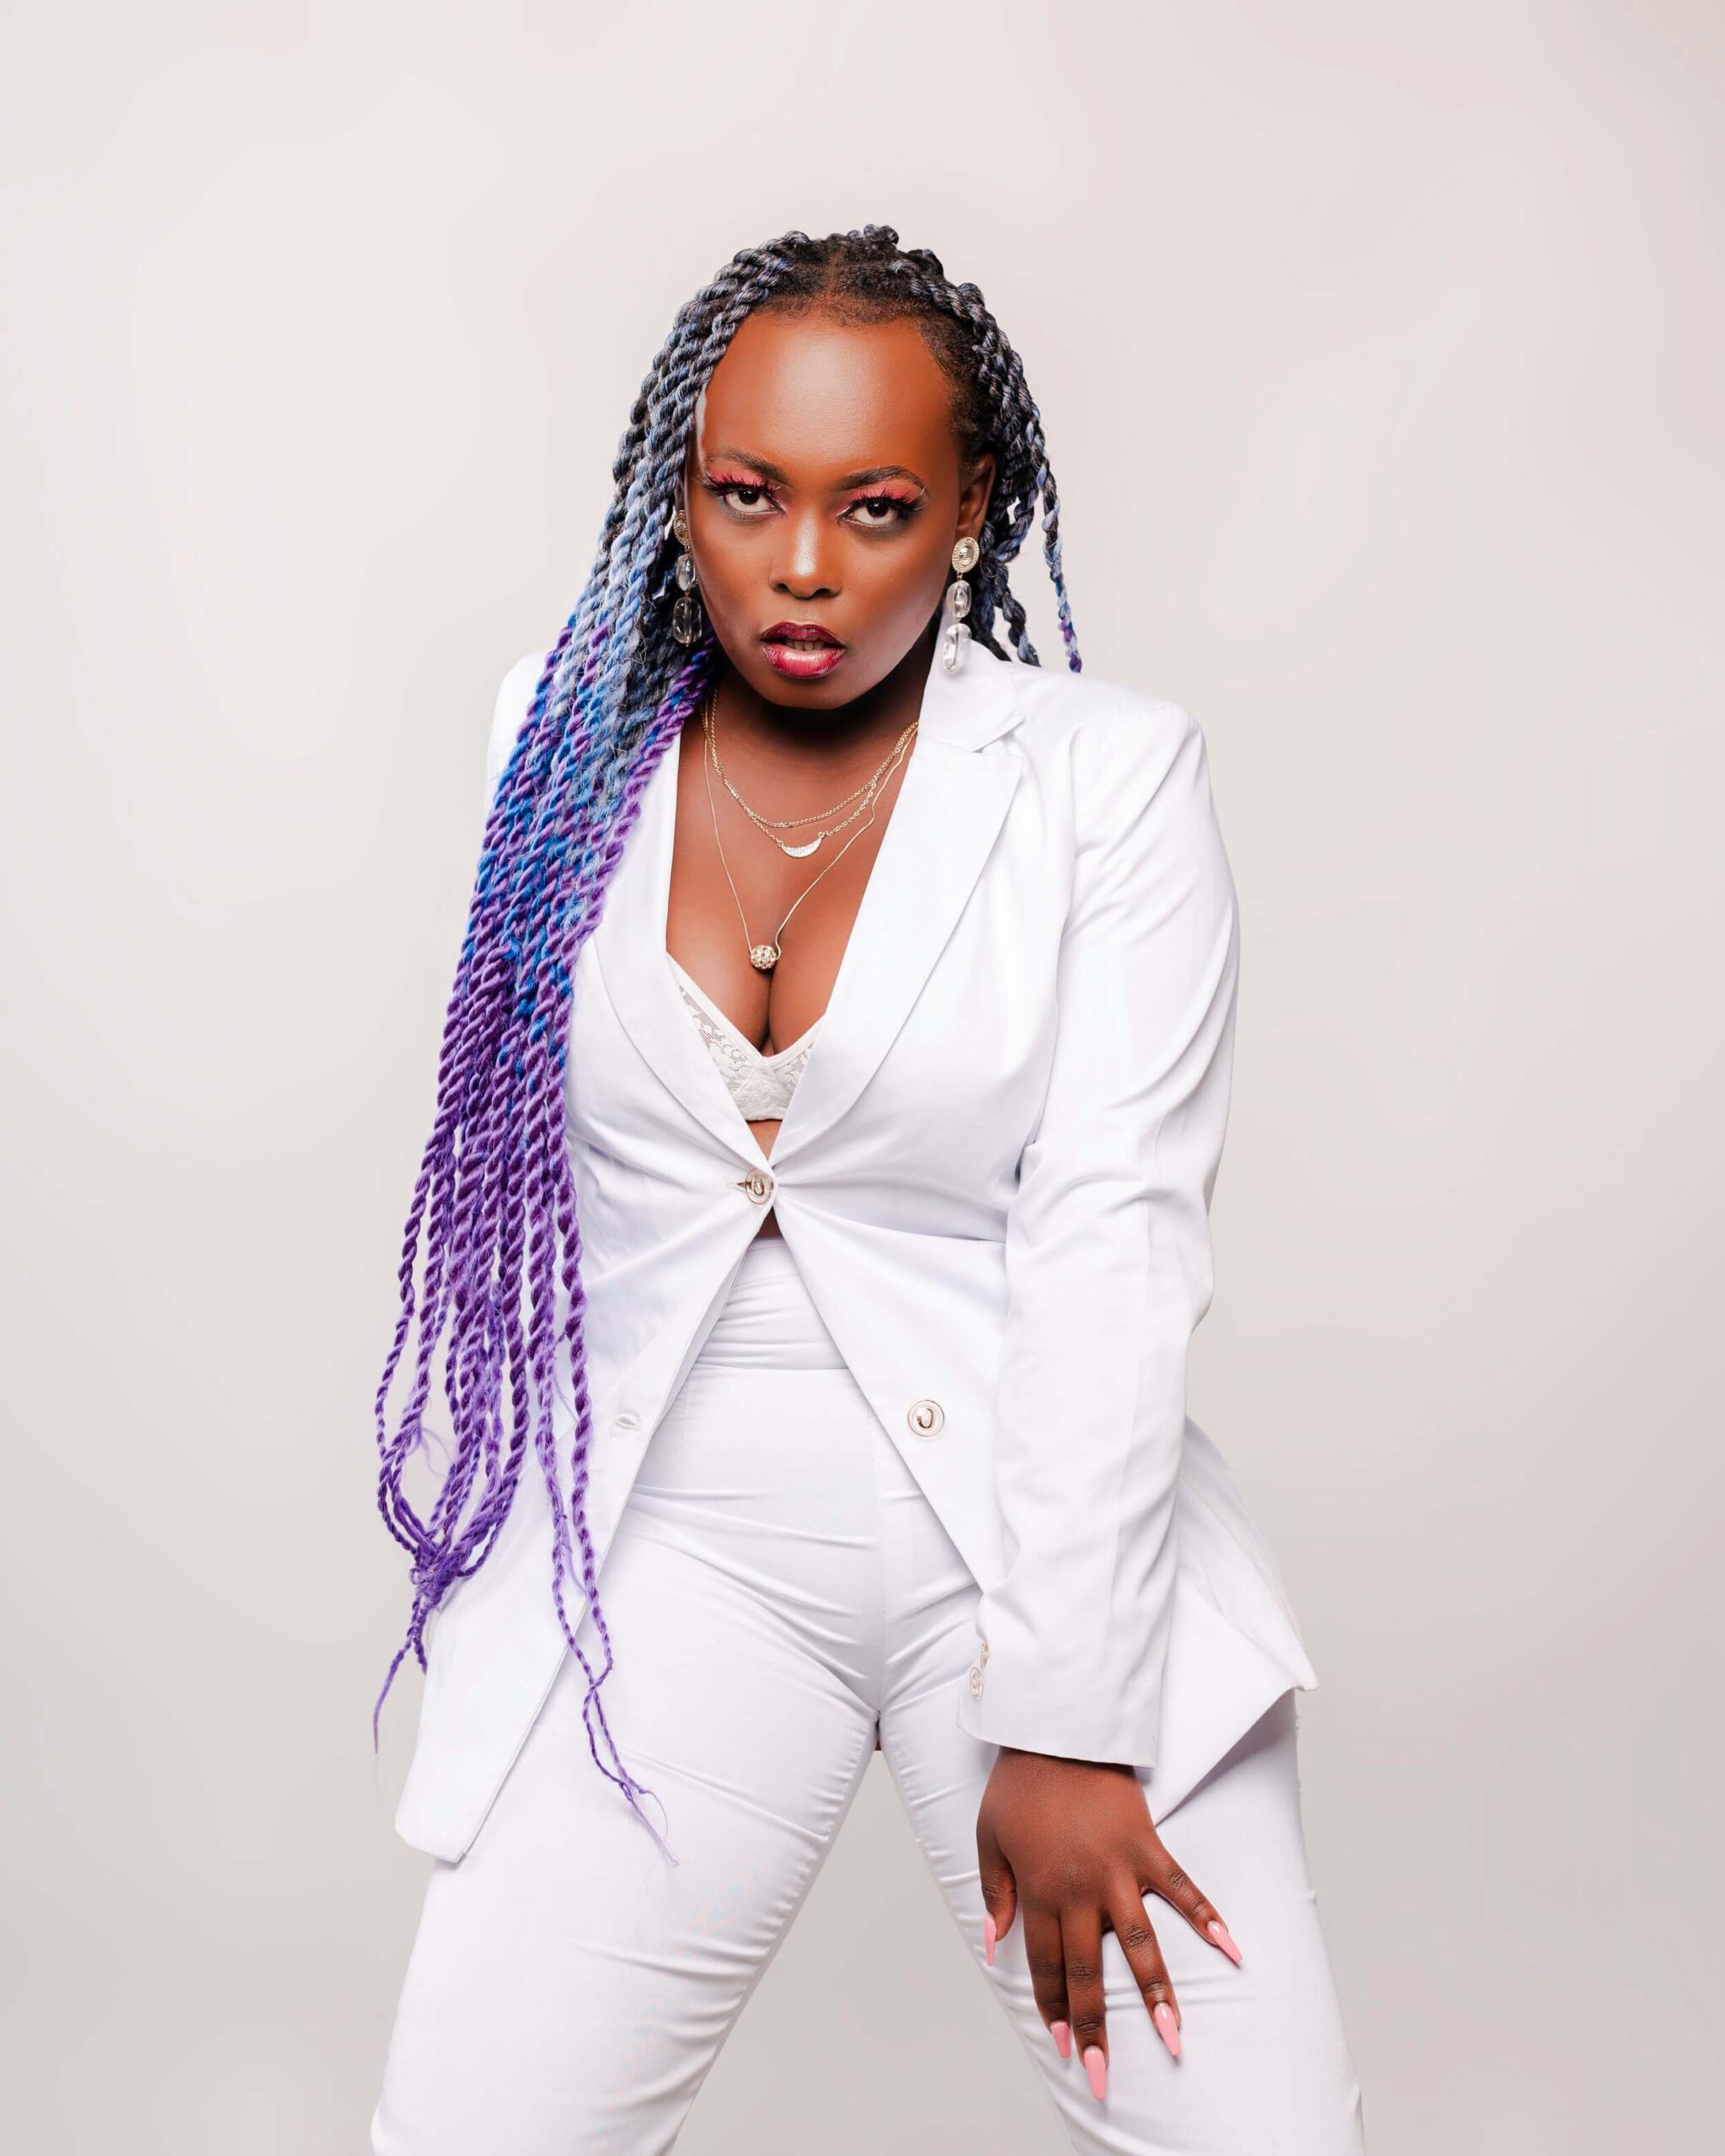 Kenyan artist Maandy Spotify EQUAL Africa